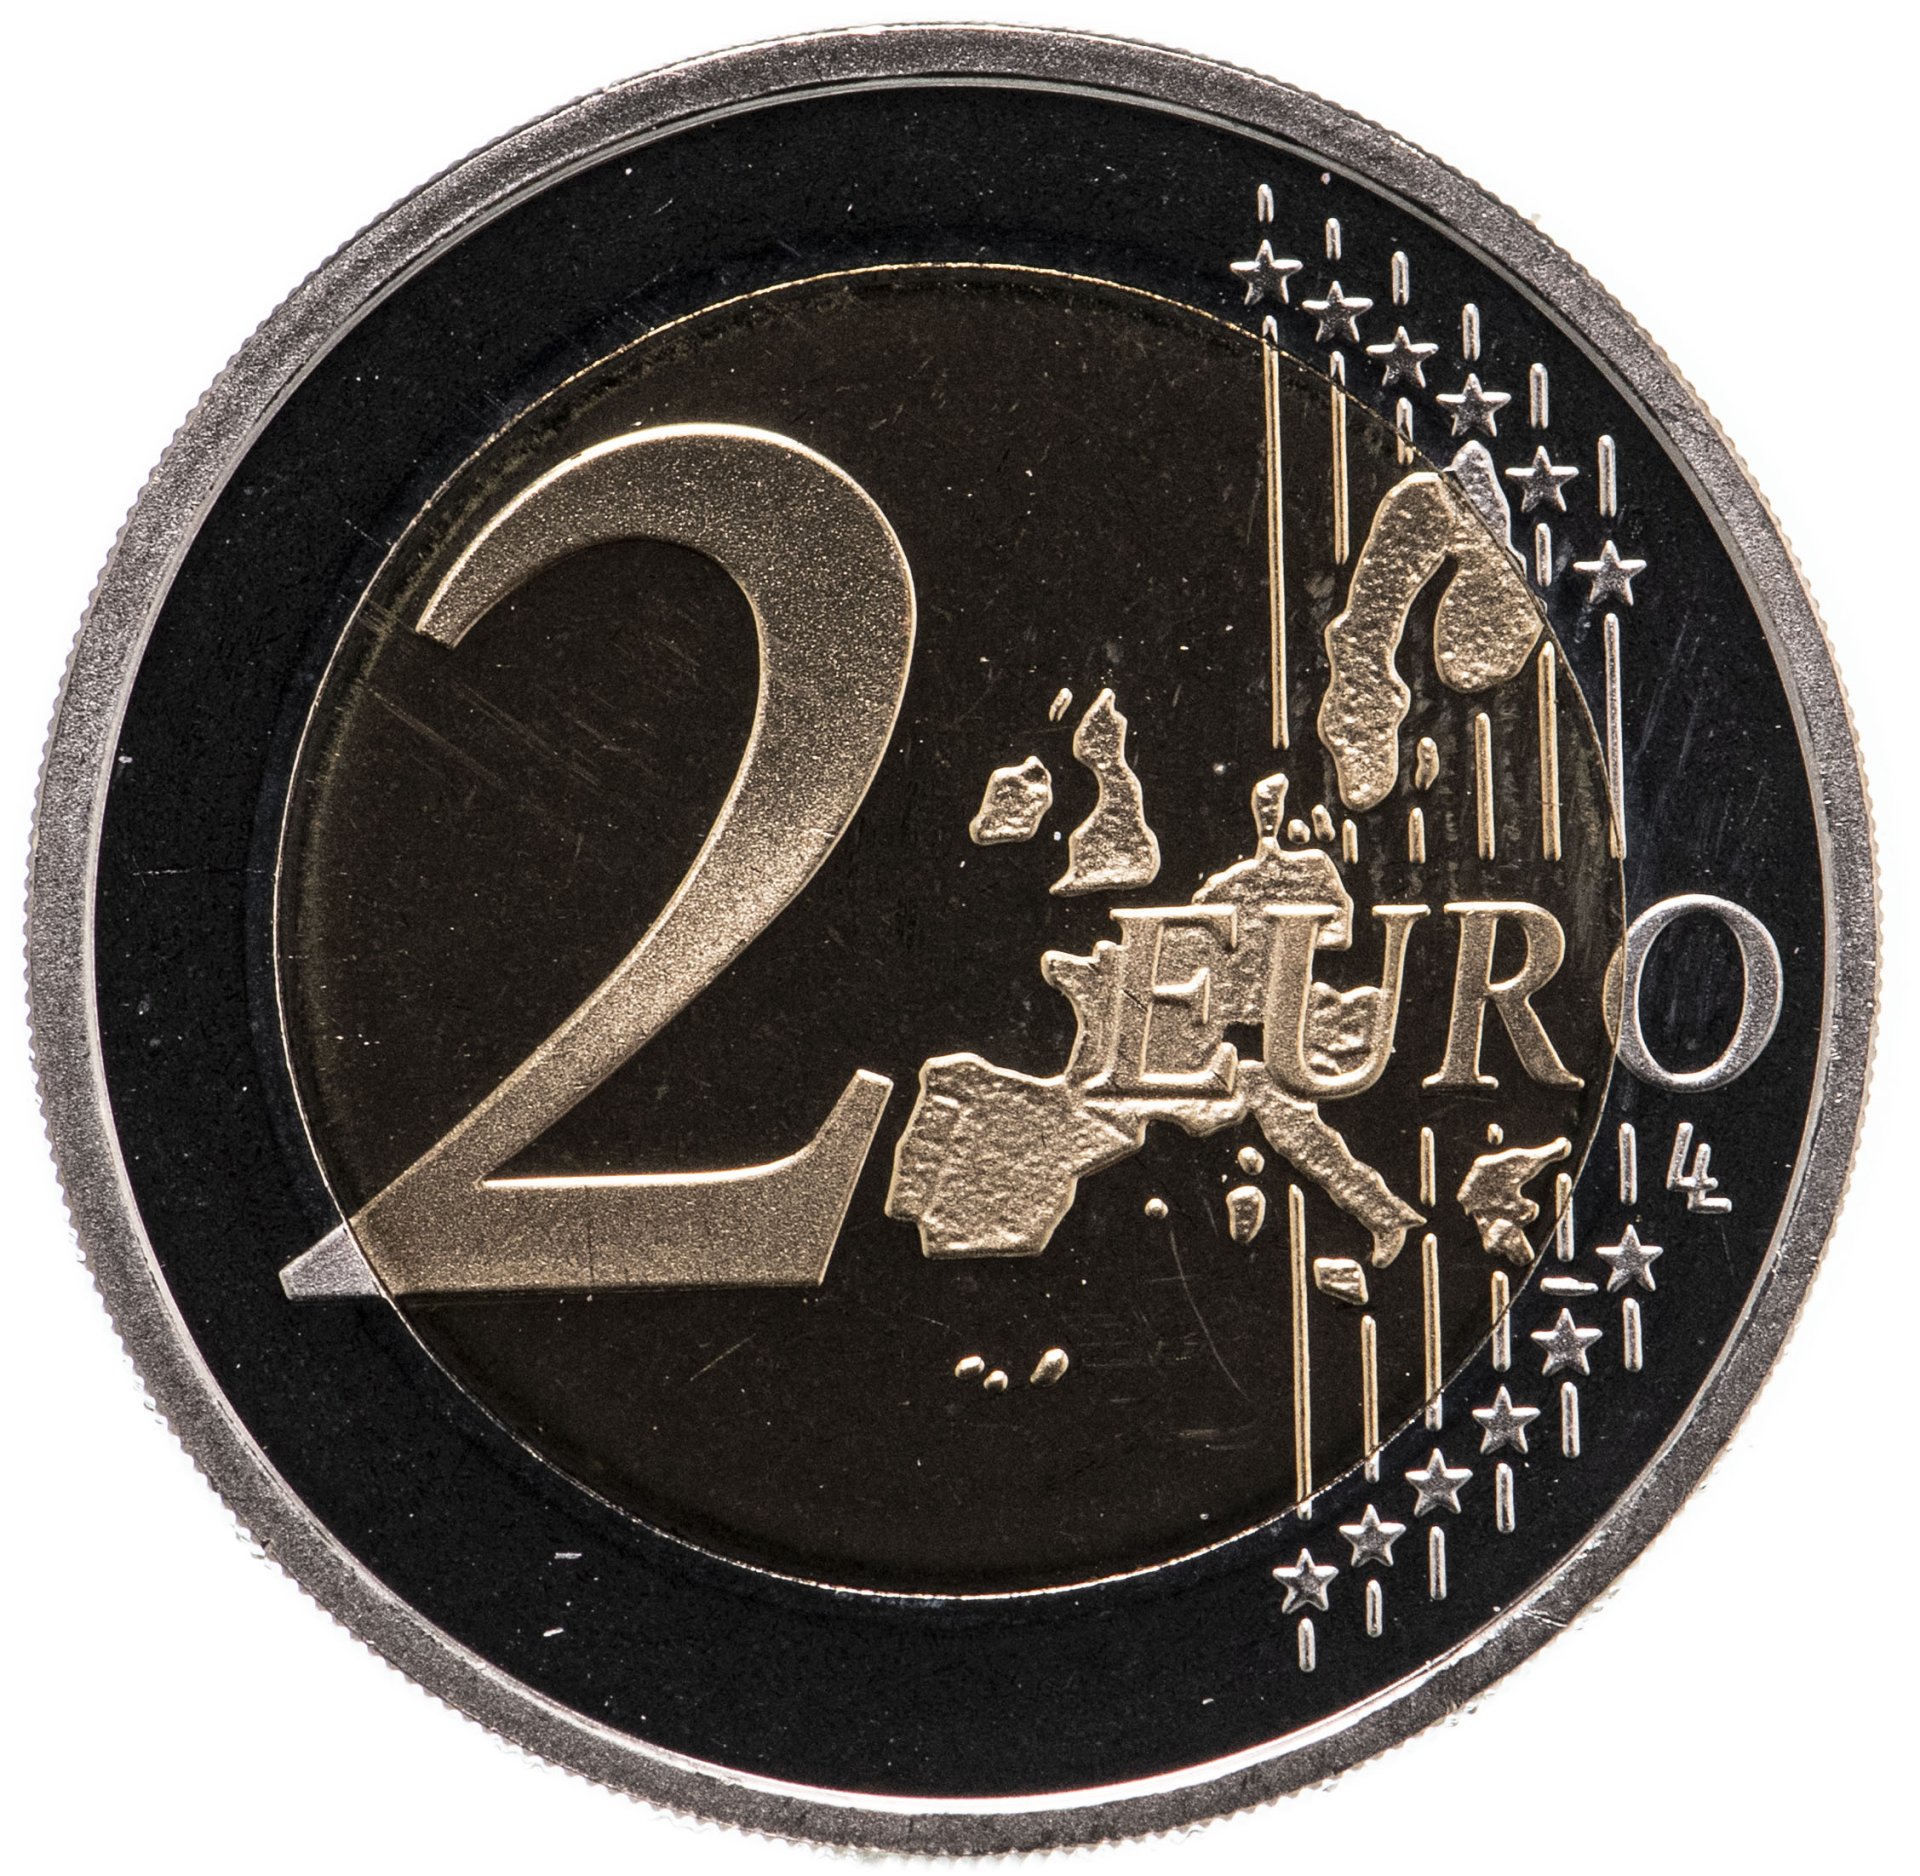 Евро 2006 года. 2 Евро Федеральная земля Шлезвиг-Гольштейн. Германия 2 евро 2006 монета набор Шлезвиг-Гольштейн. 2 Евро федеральные земли Германии список.